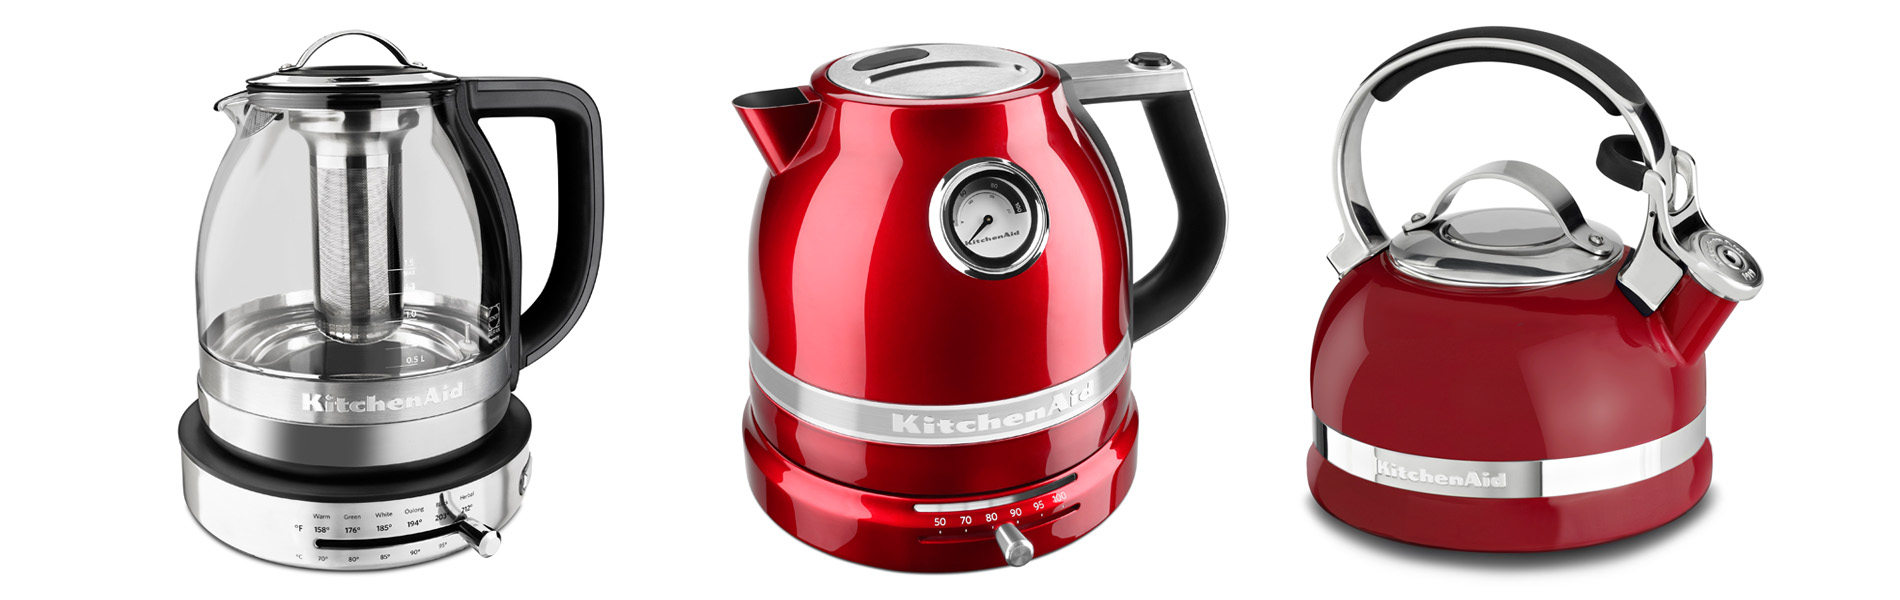 https://www.multivu.com/players/English/7766757-kitchenaid-tea-kettle-gift-guide/image/hero-null-HR.jpg